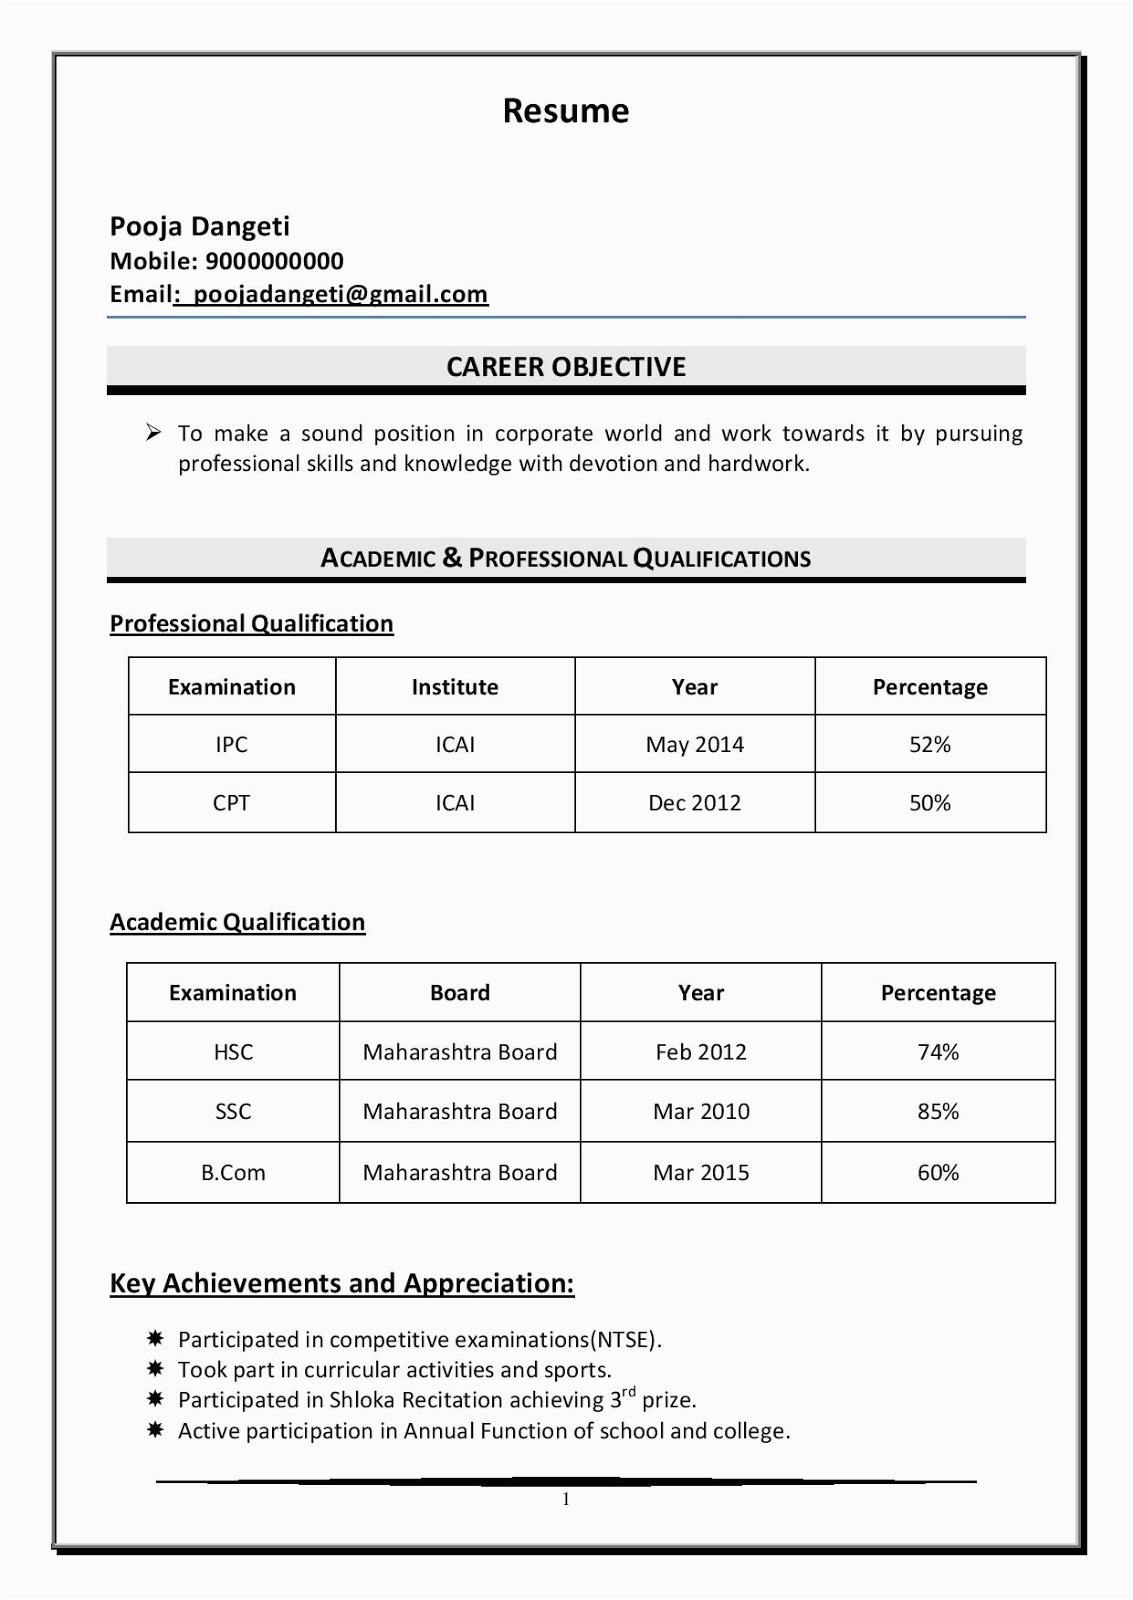 Sample Resume for Freshers Bcom Graduate Good Resume Template for B Freshers Addictips